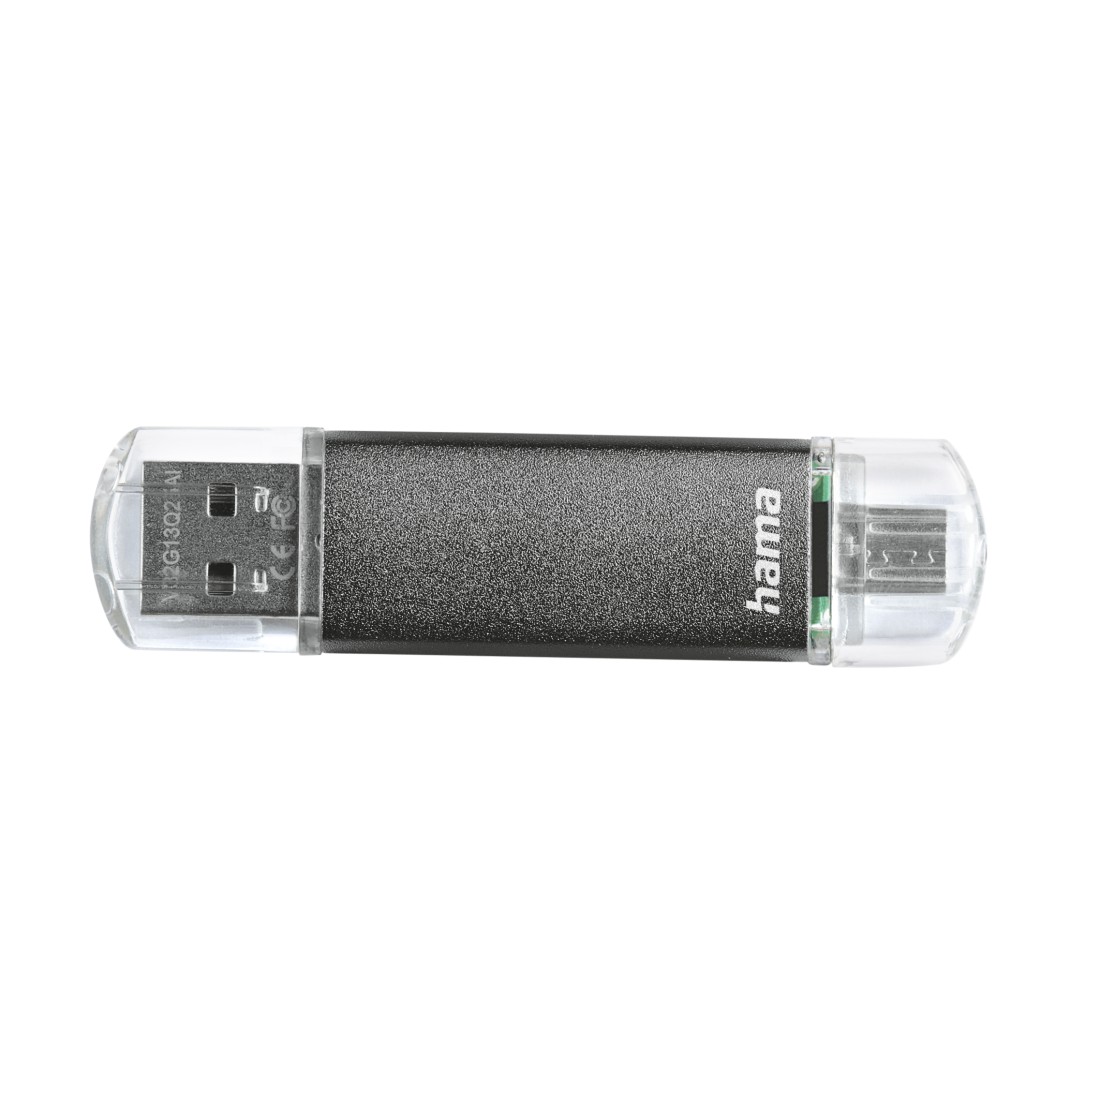 00123924 Hama "Laeta Twin" USB Flash Drive, USB 2.0, 16 GB, 10 MB/s, grey